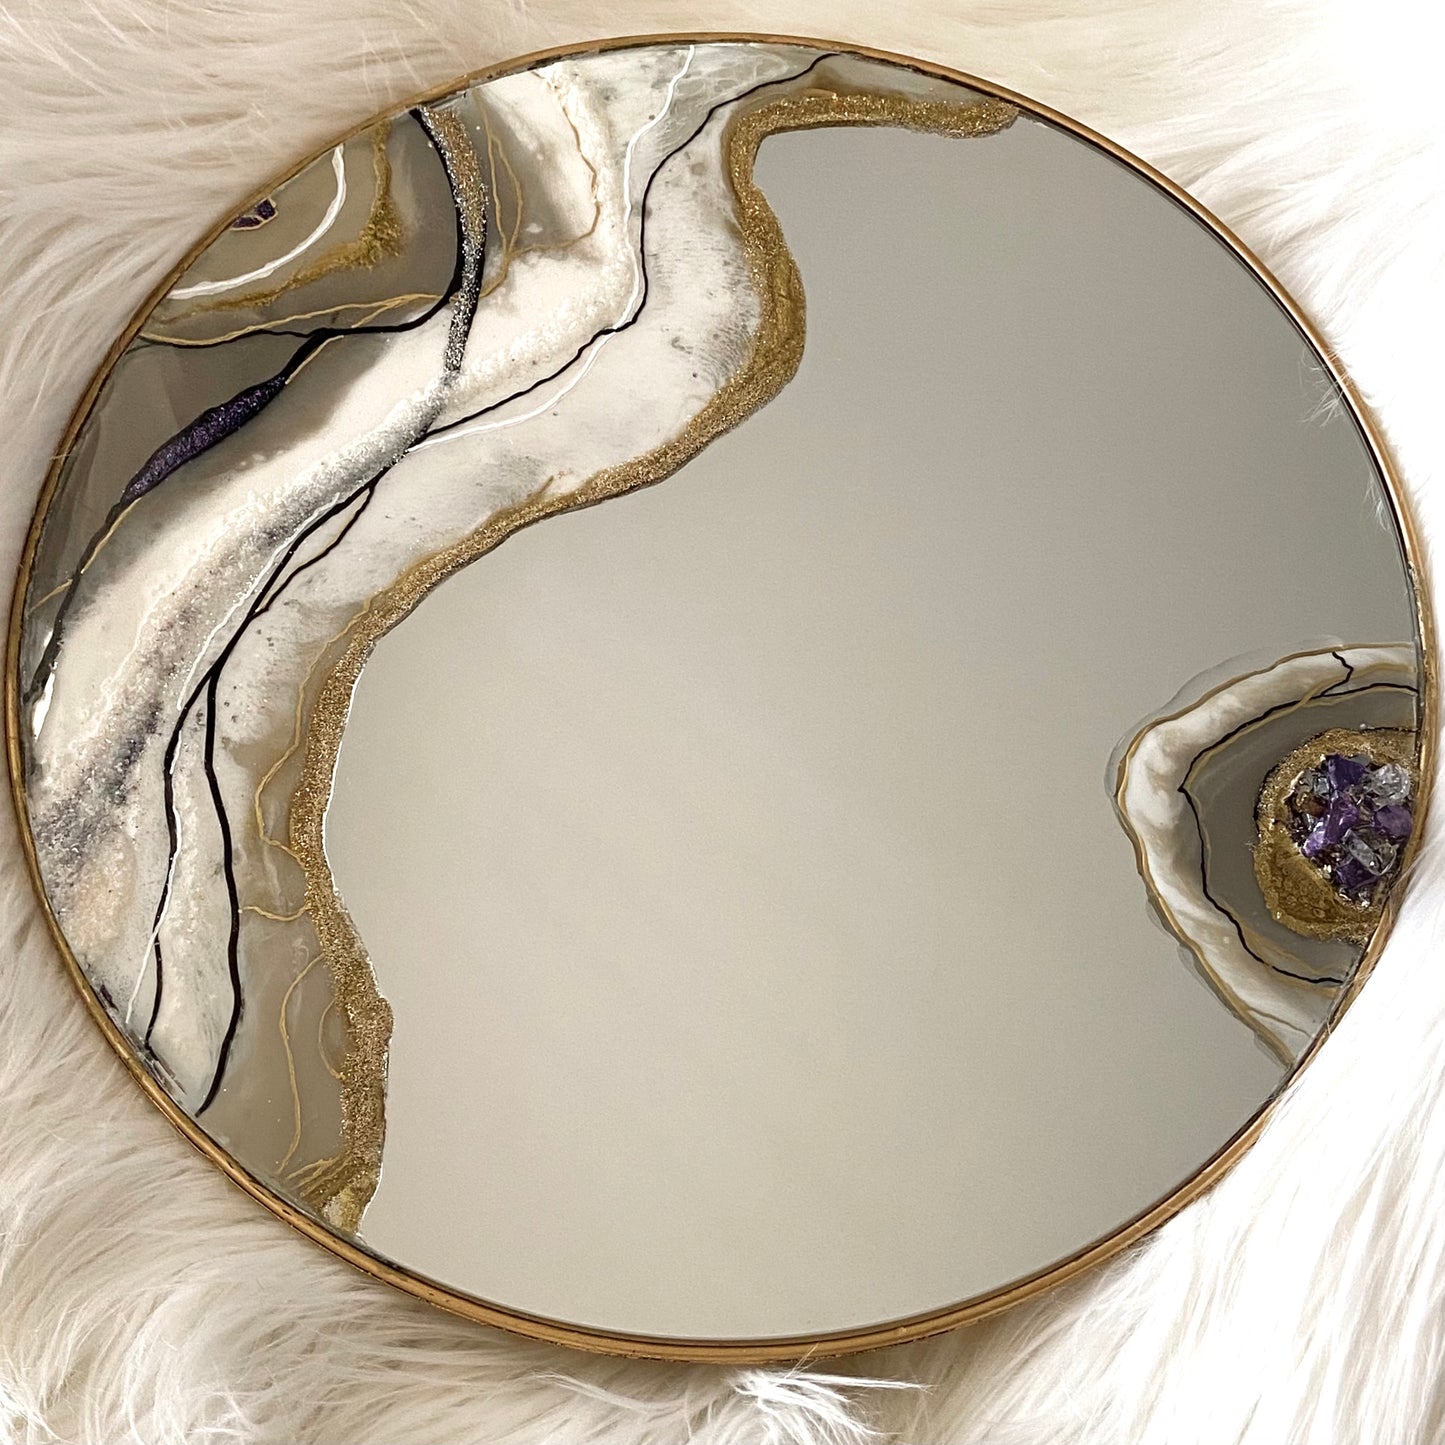 Agate round mirror in neutral colors with quartz  - Mamota Creative